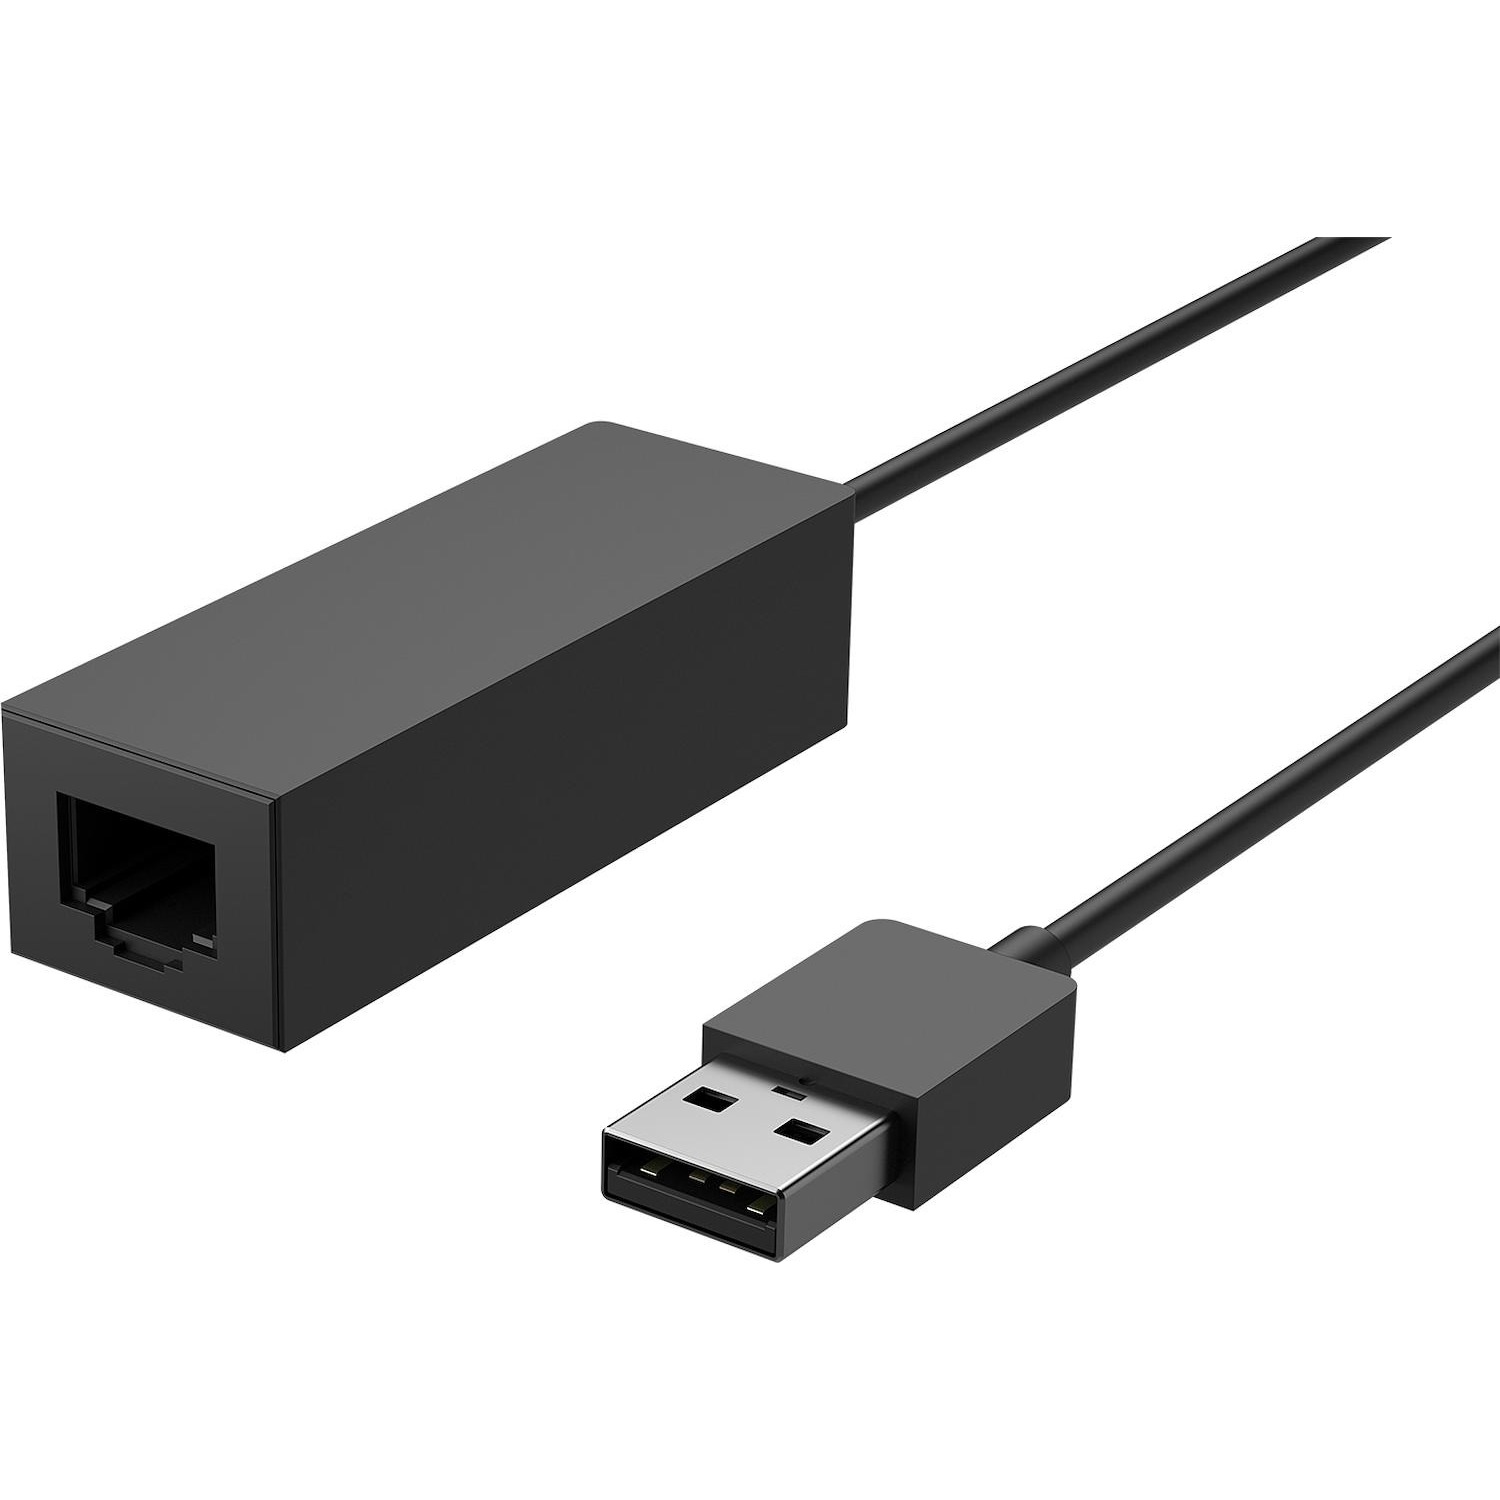 Immagine per USB Ethernet Microsoft EJR-00006 da DIMOStore